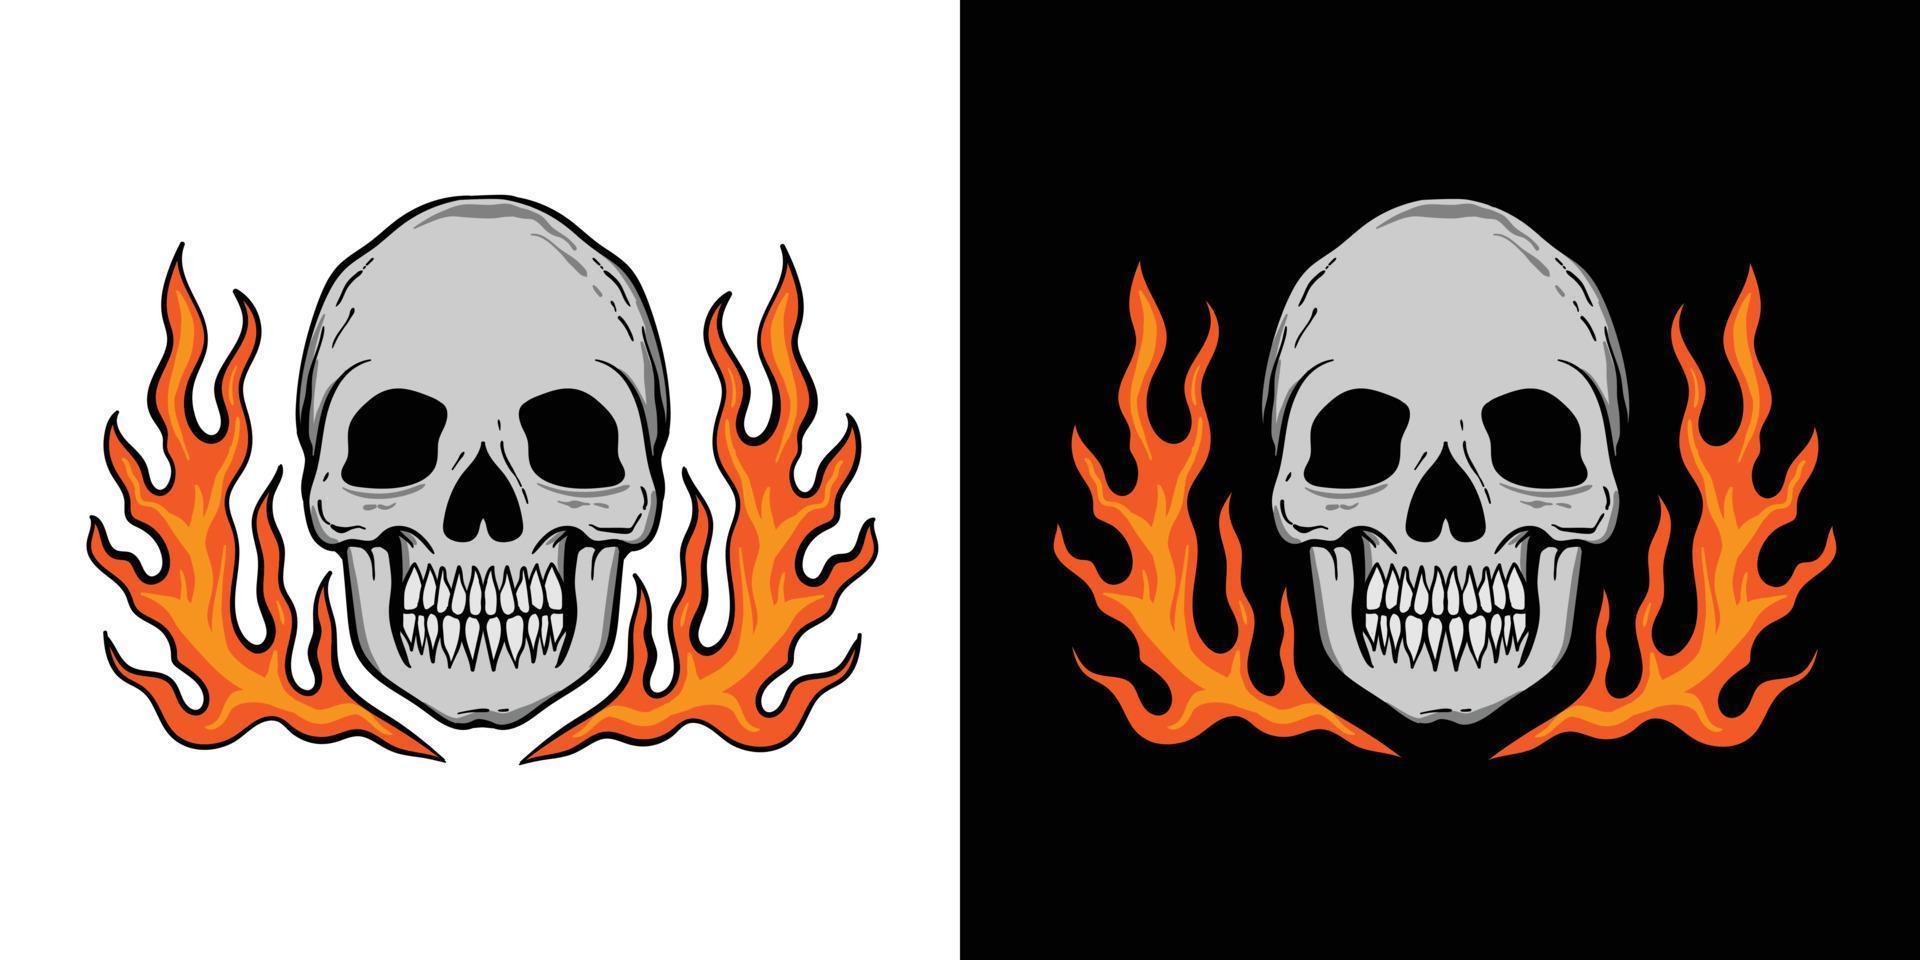 skull illustration with fire for tshirt design, tattoo, sticker, poster etc vector